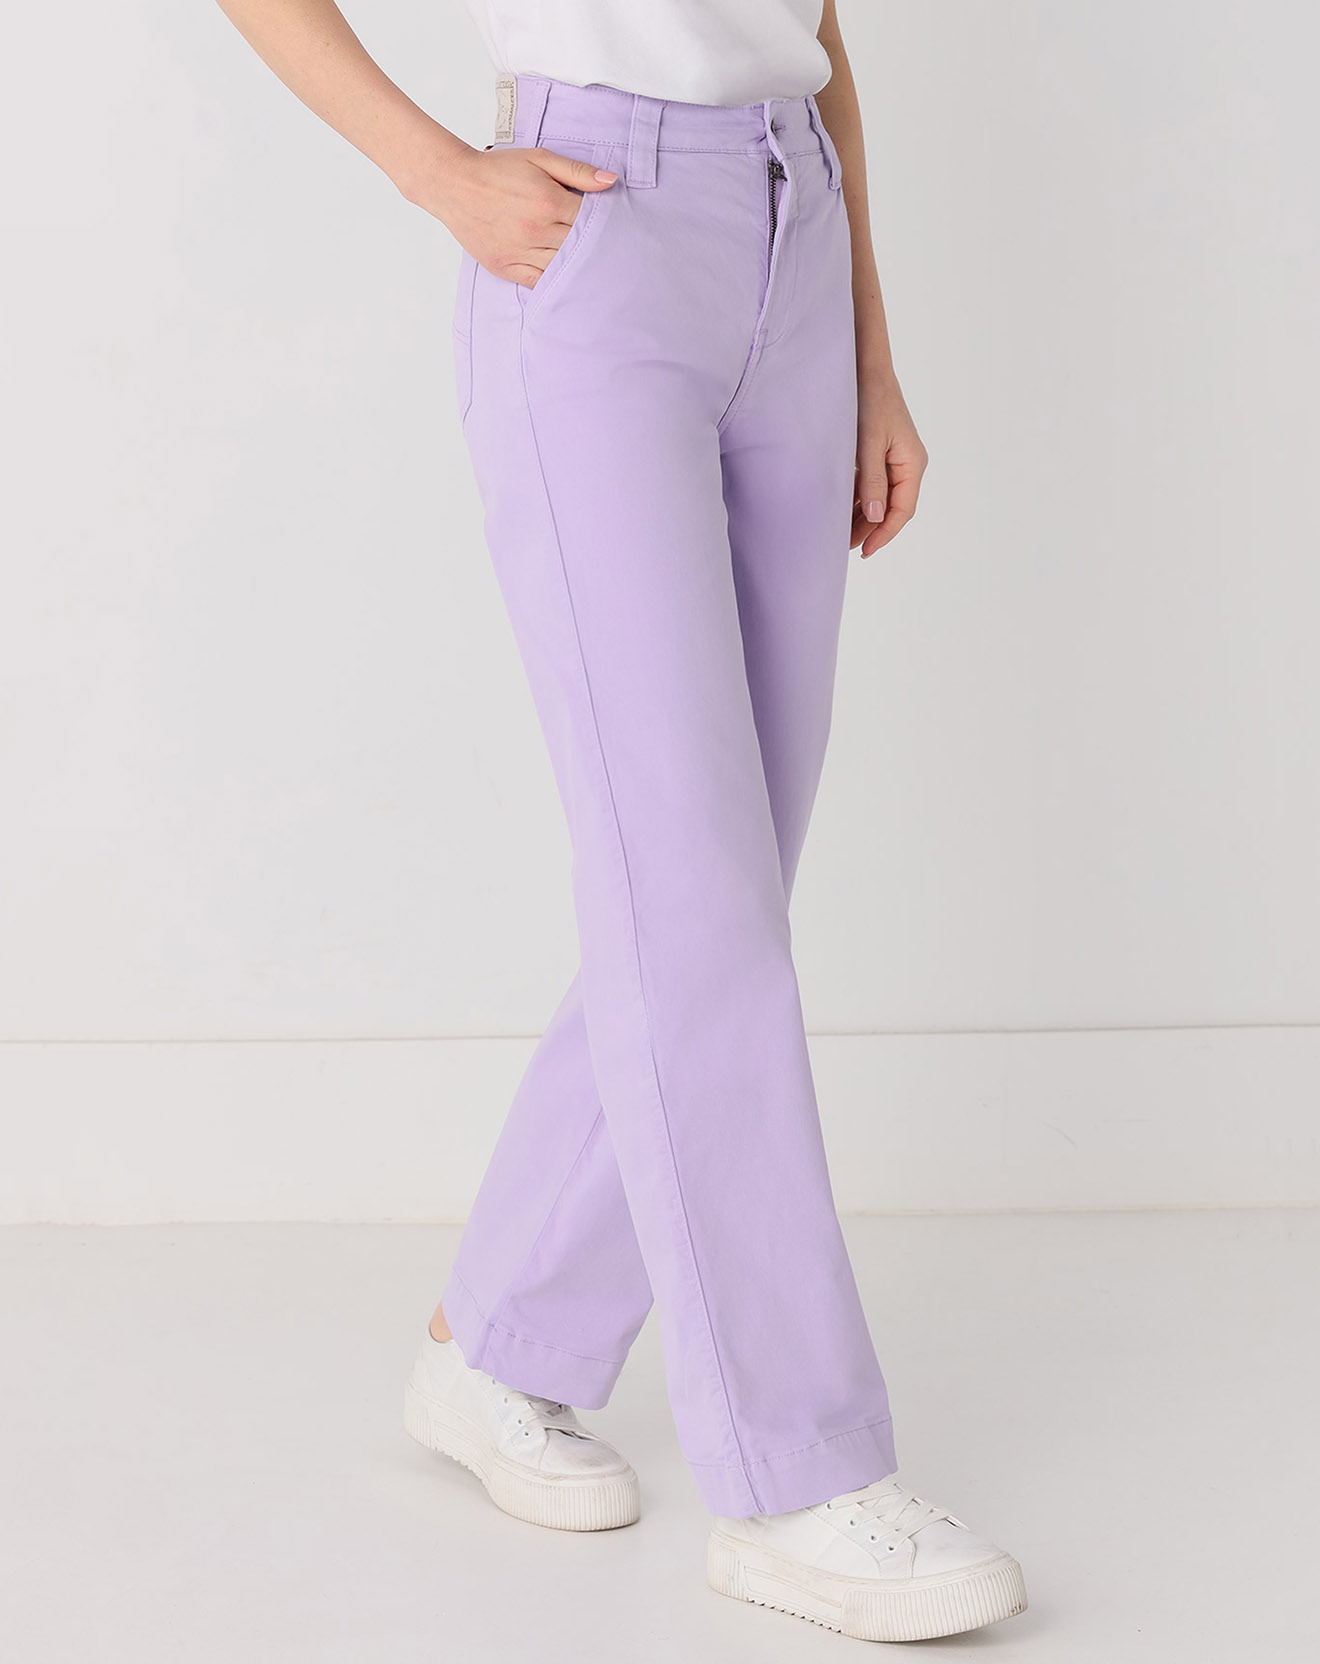 cimarron - pantalon chino olivia violet